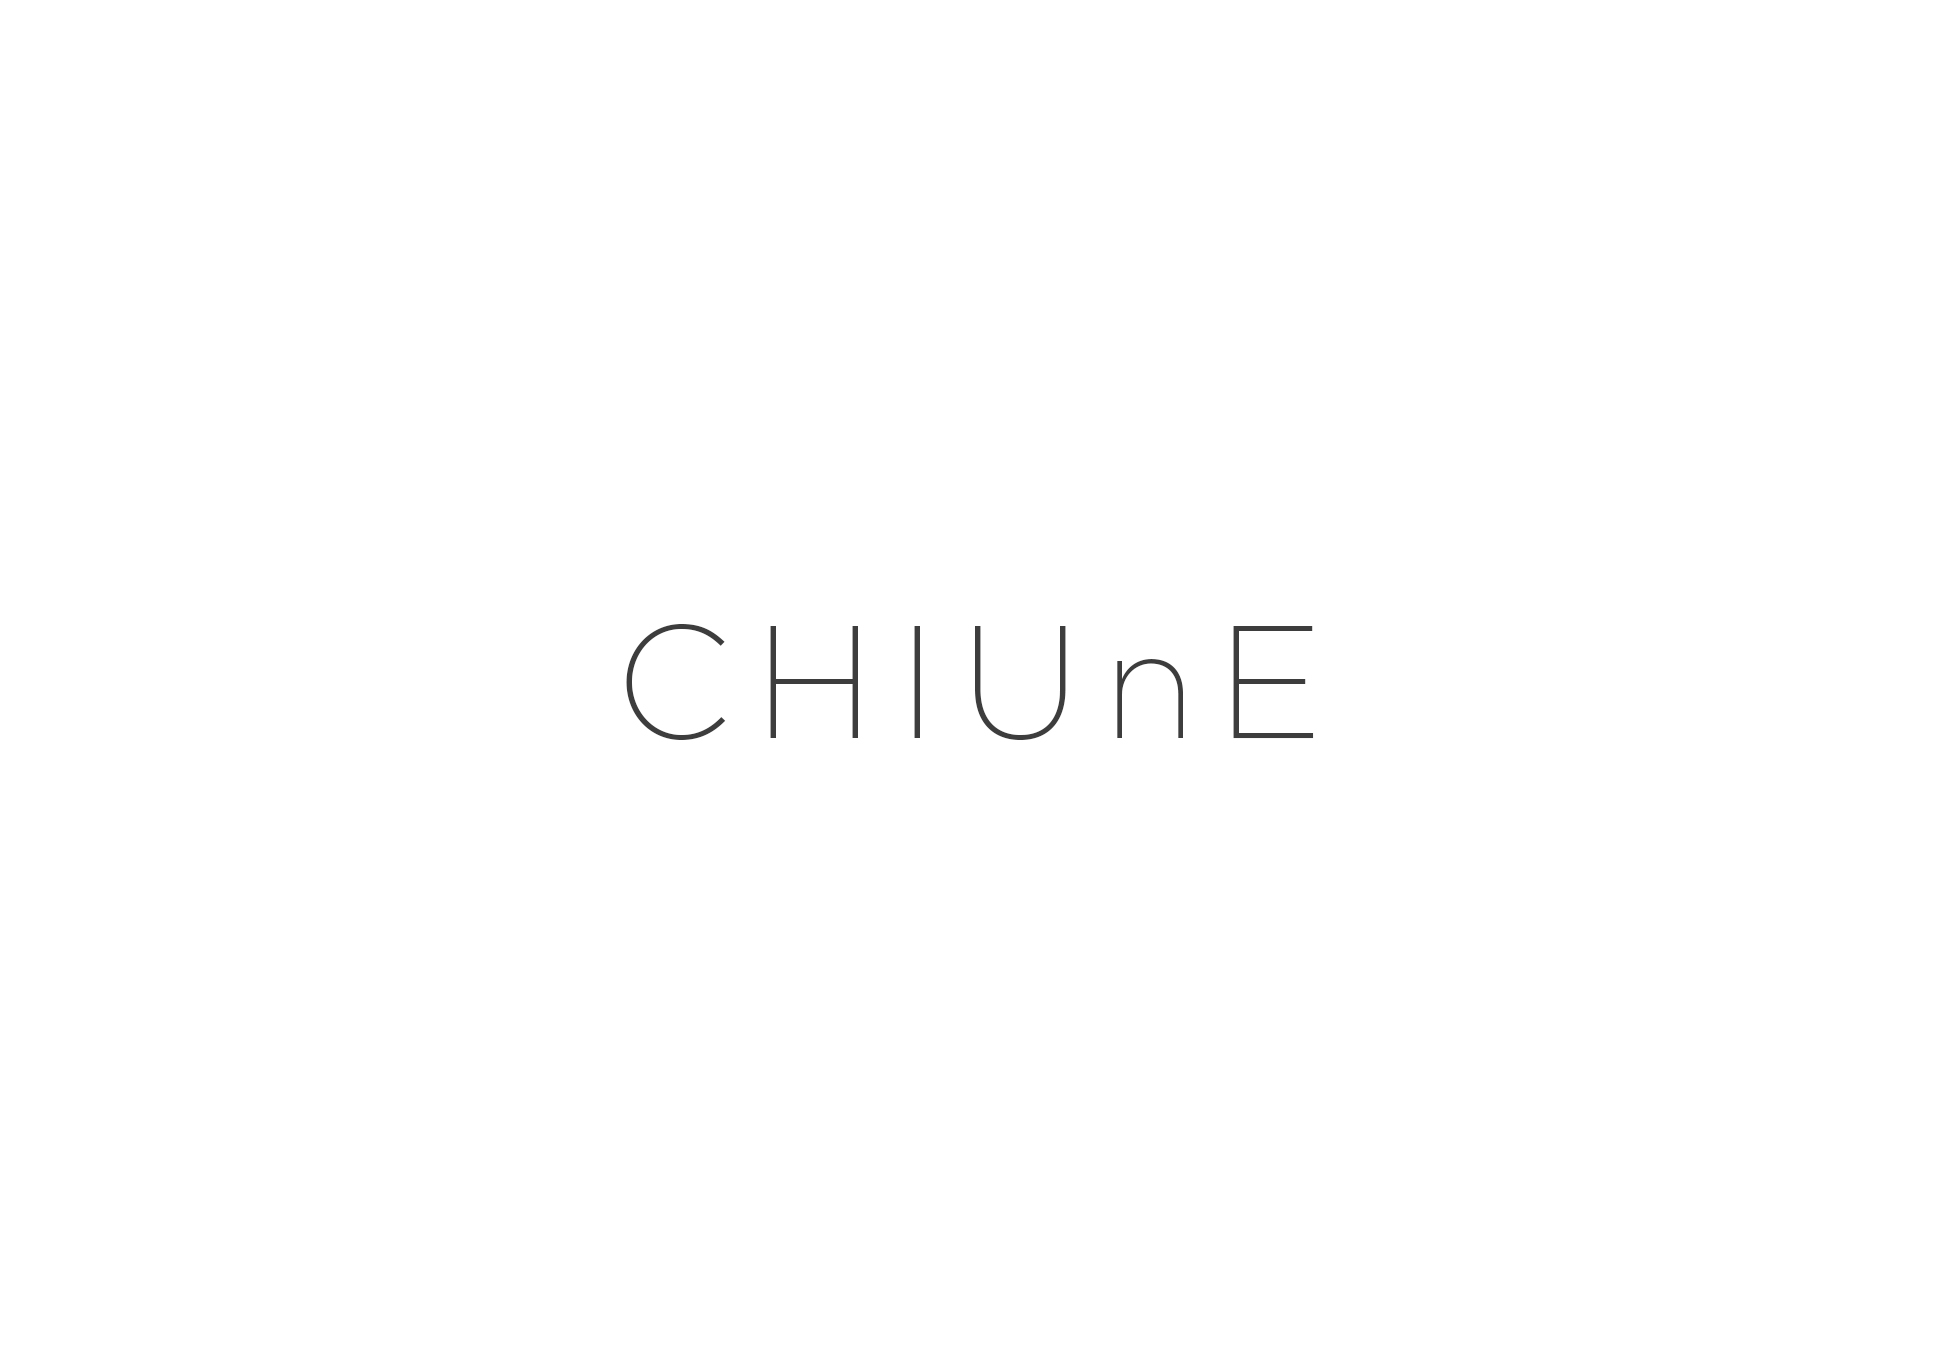 CHIUnE's image